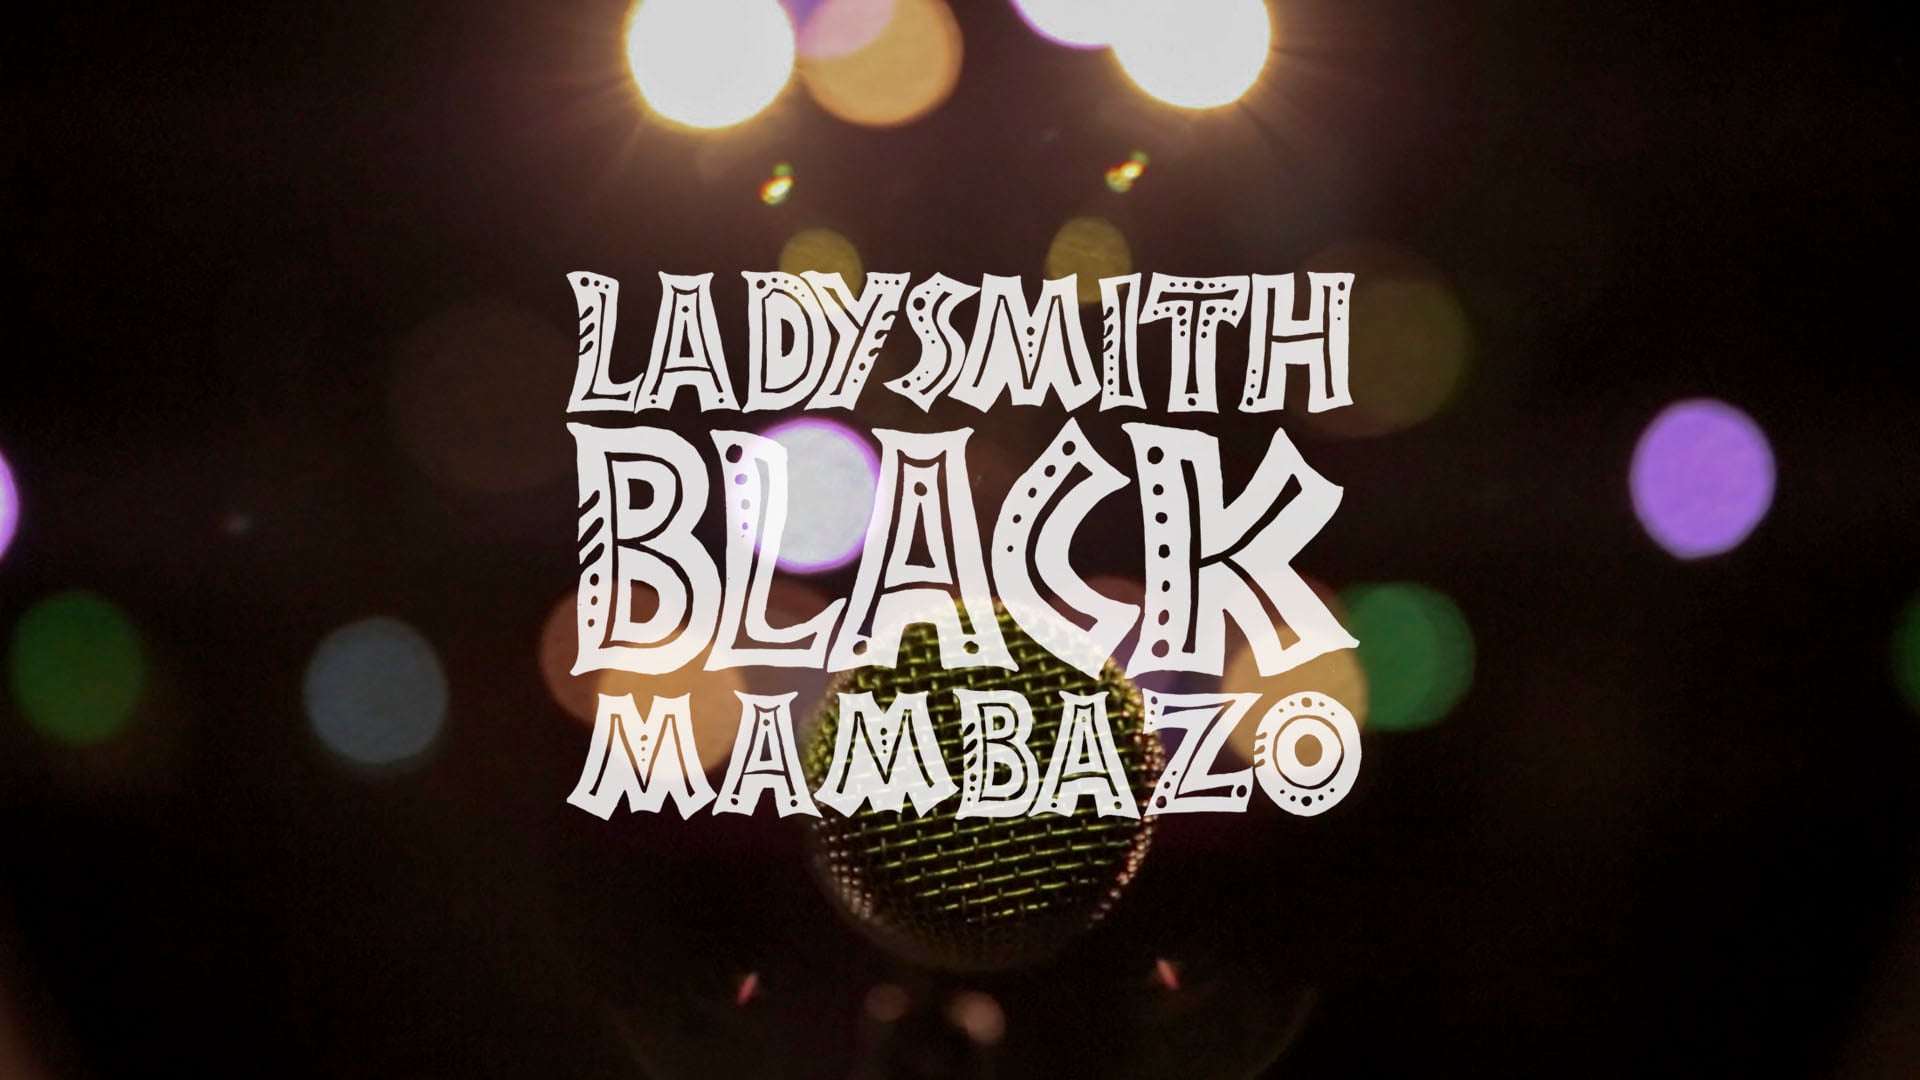 Ladysmith Black Mambazo : The last original member